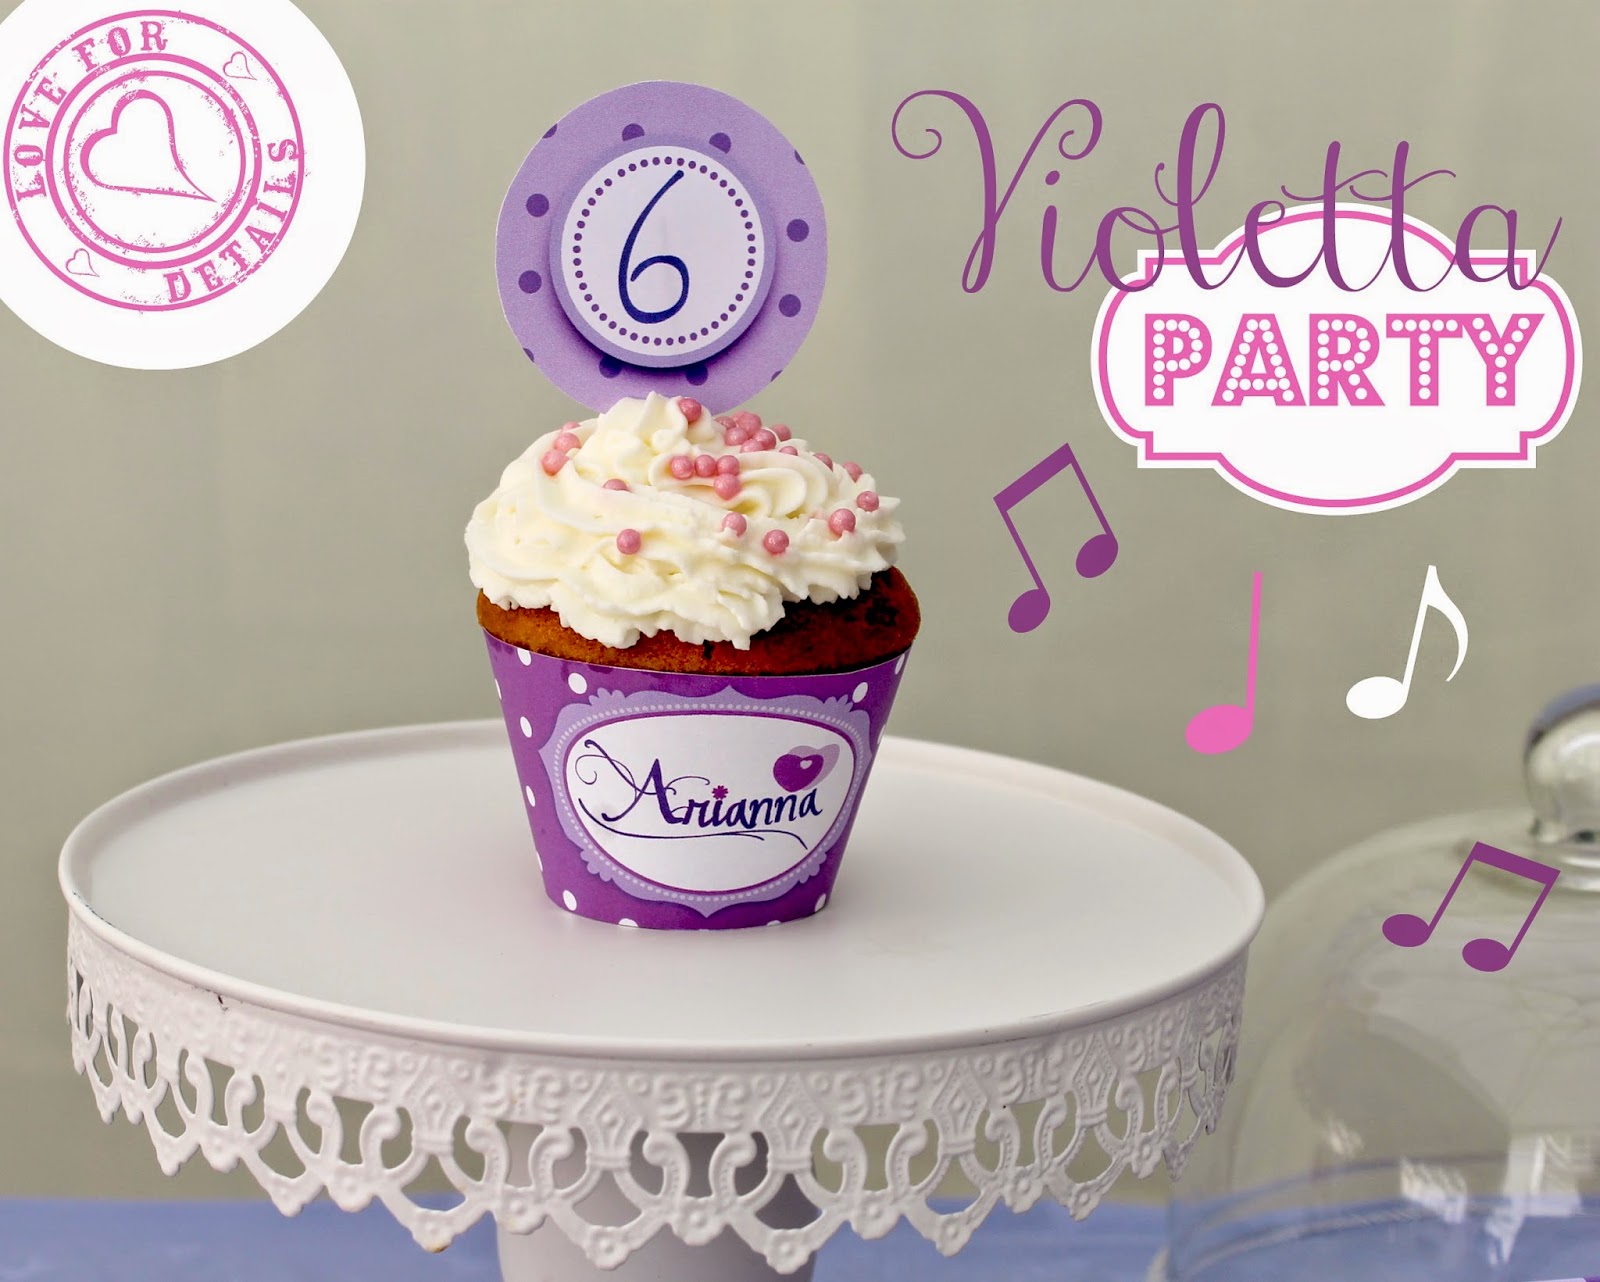 Violetta Party